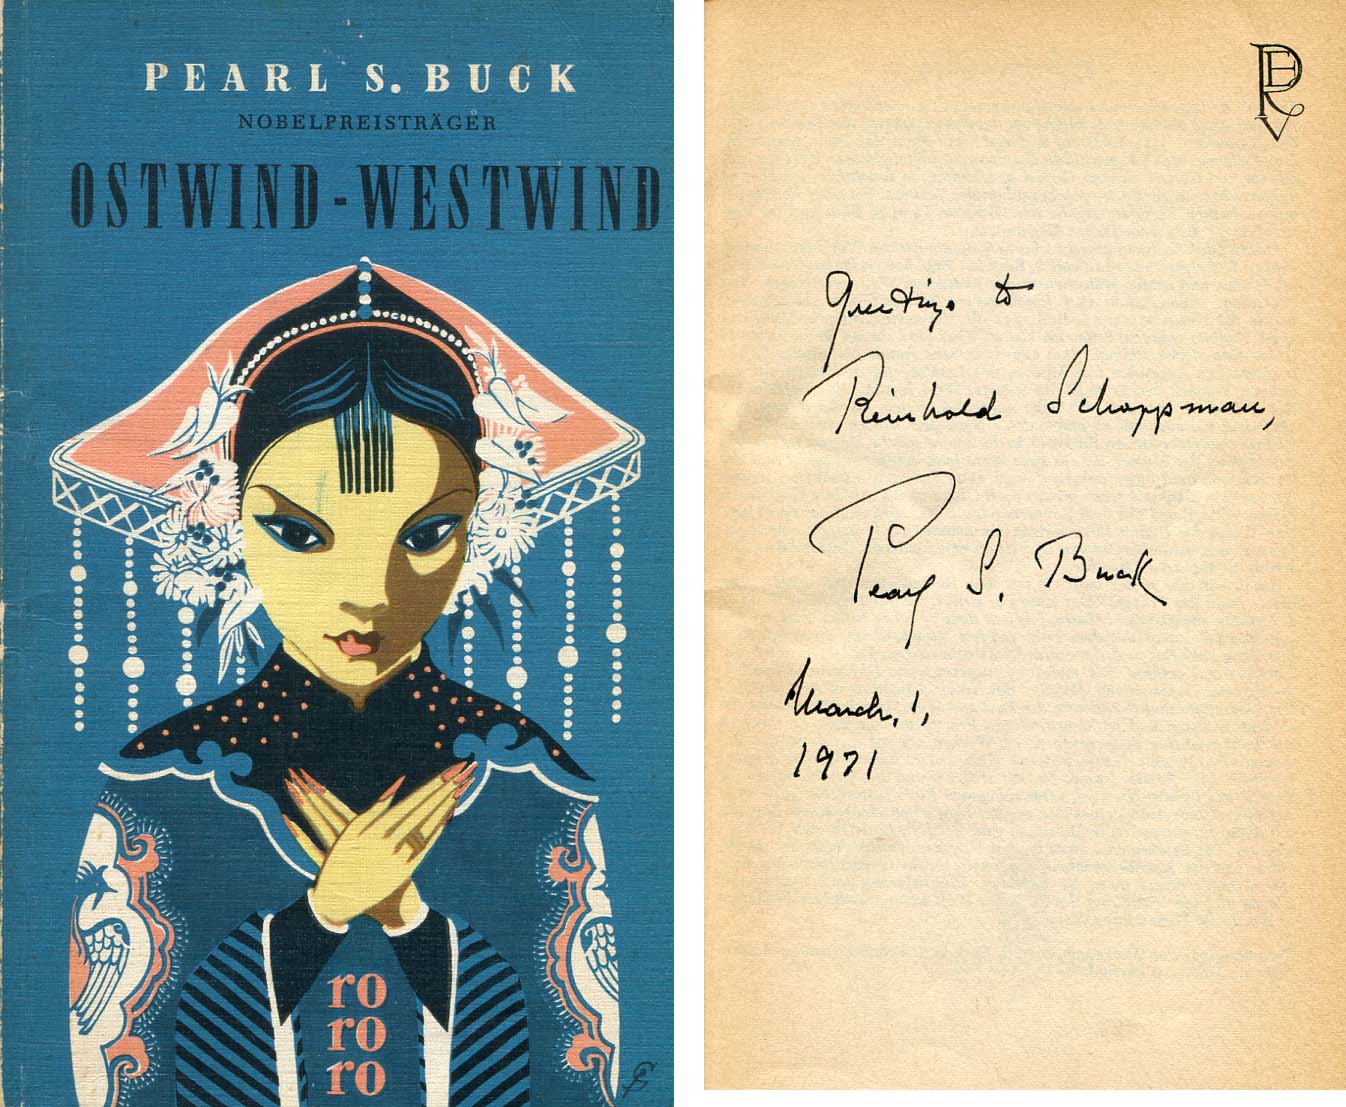 Pearl S. Buck Autograph Autogramm | ID 6714618577045